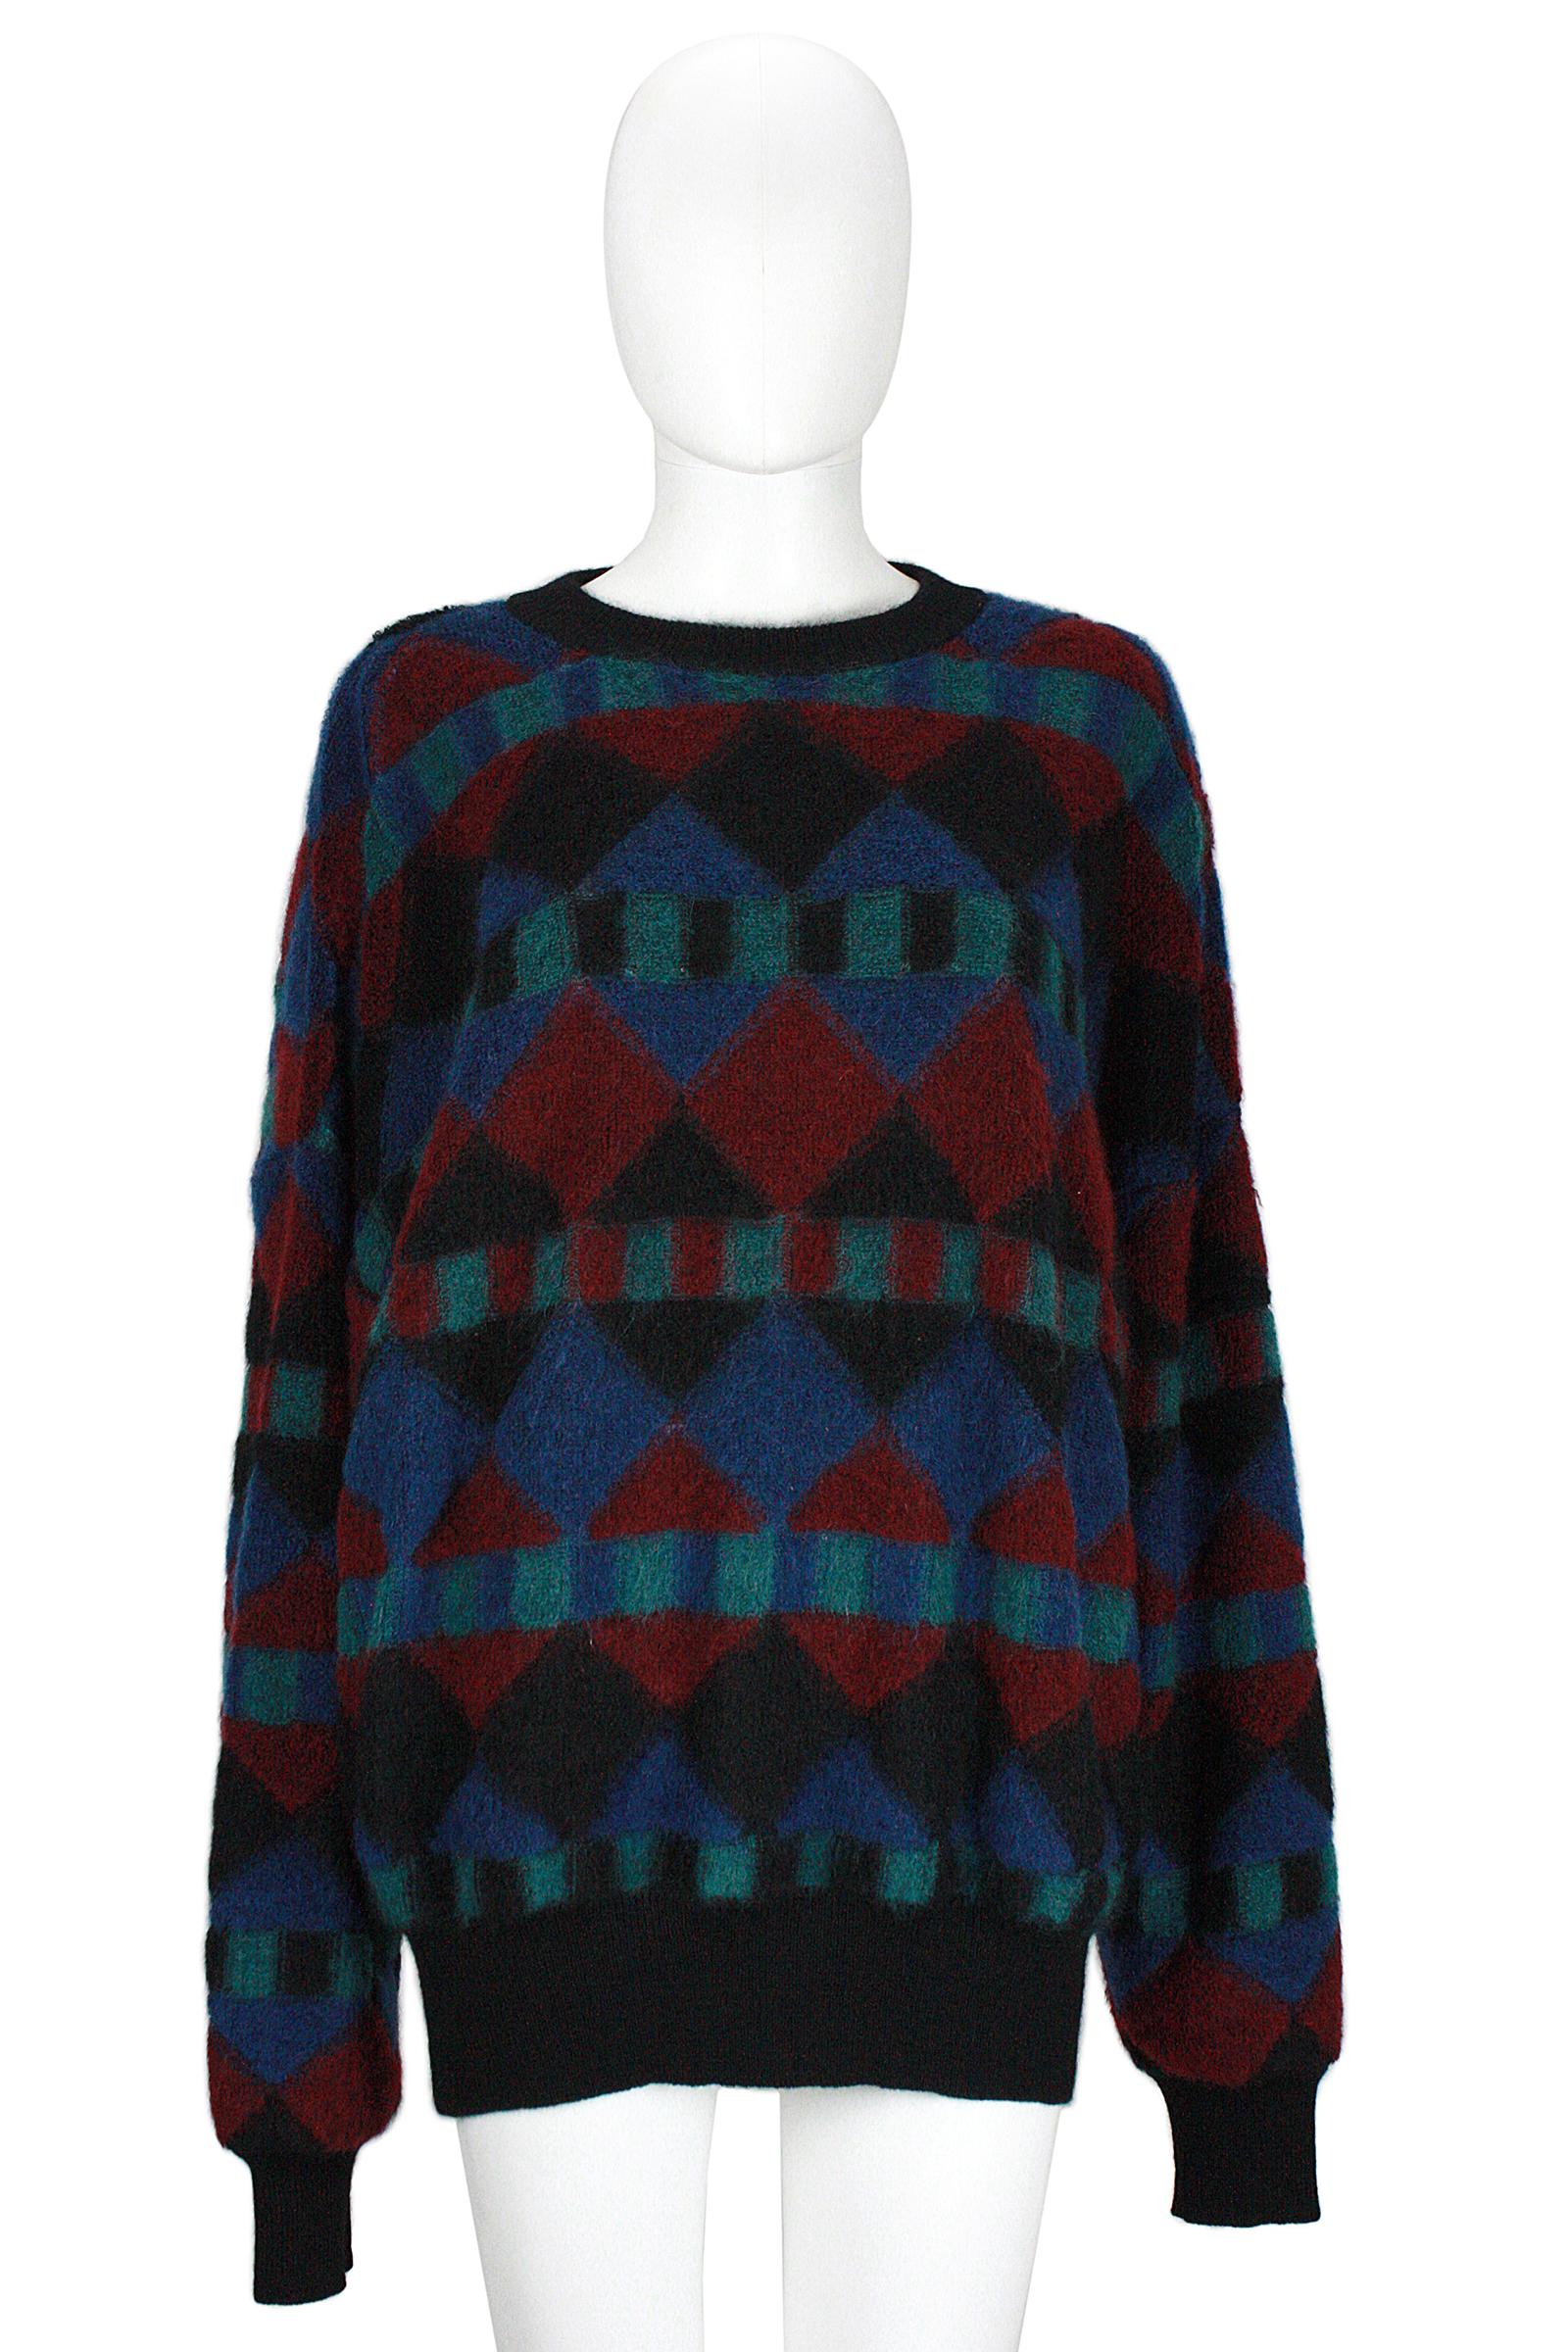 Missoni 
Knit sweater 
Knit stripe trim 
Crew neck 
Soft weave that stretches 
Mohair blend
Geometric pattern